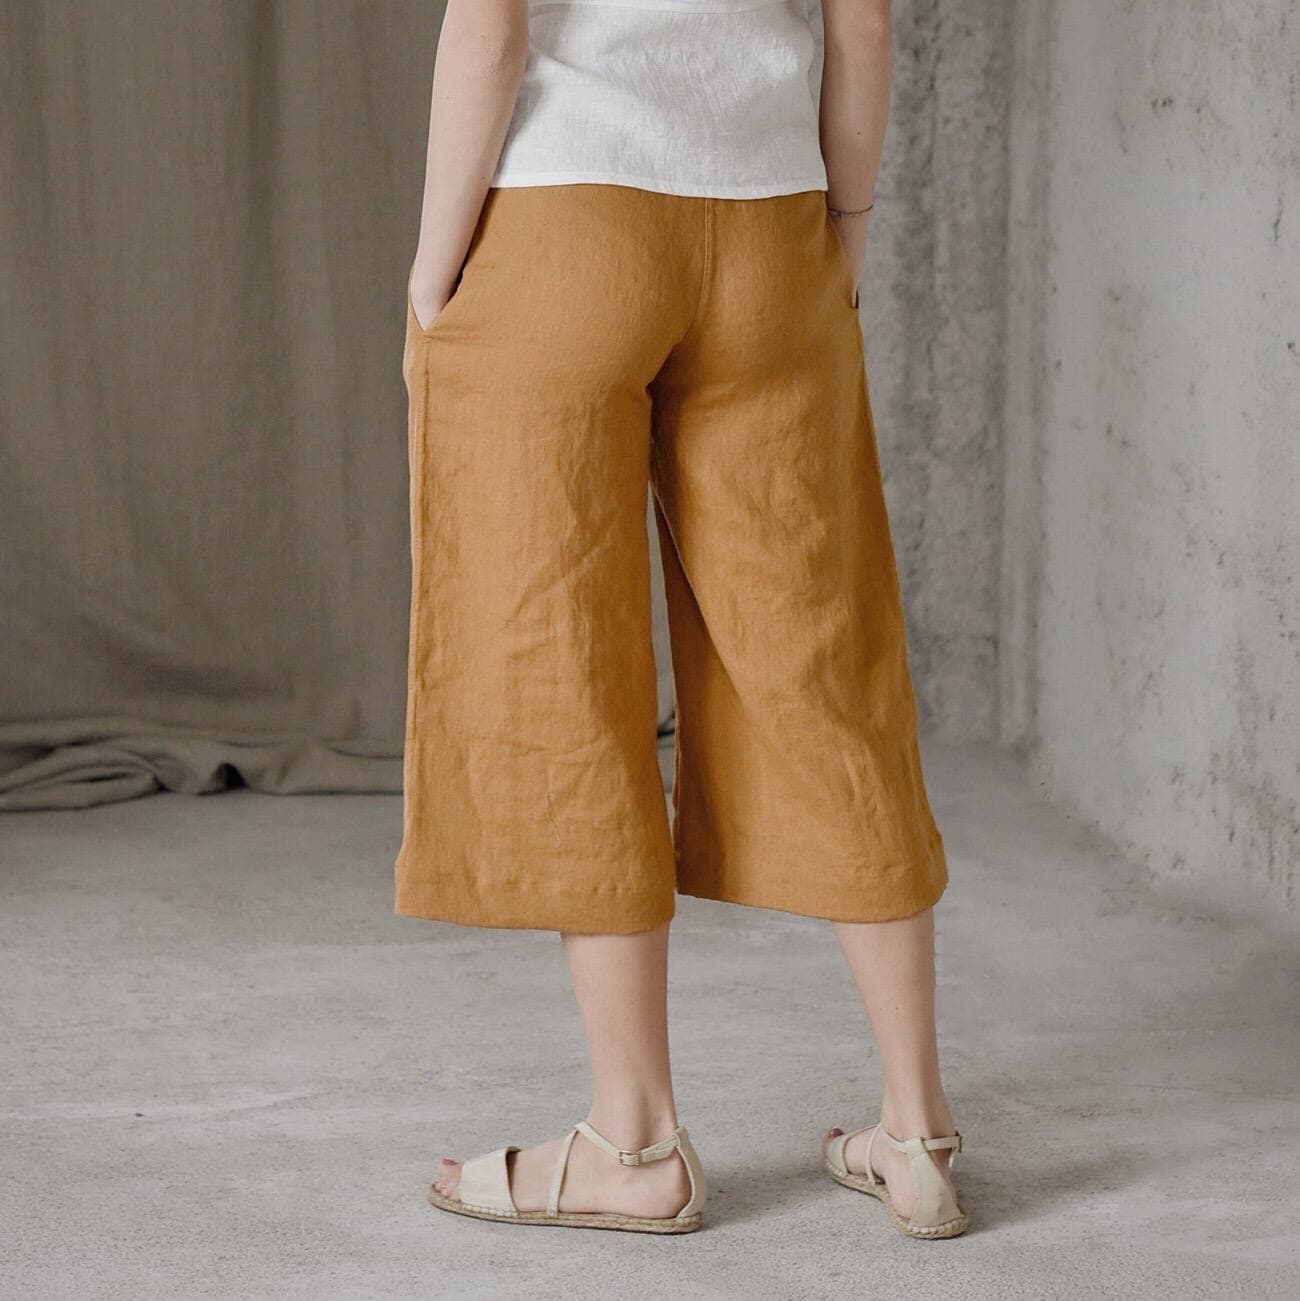 Pantalon lino - ladrillo de Mujer — Cuatroases